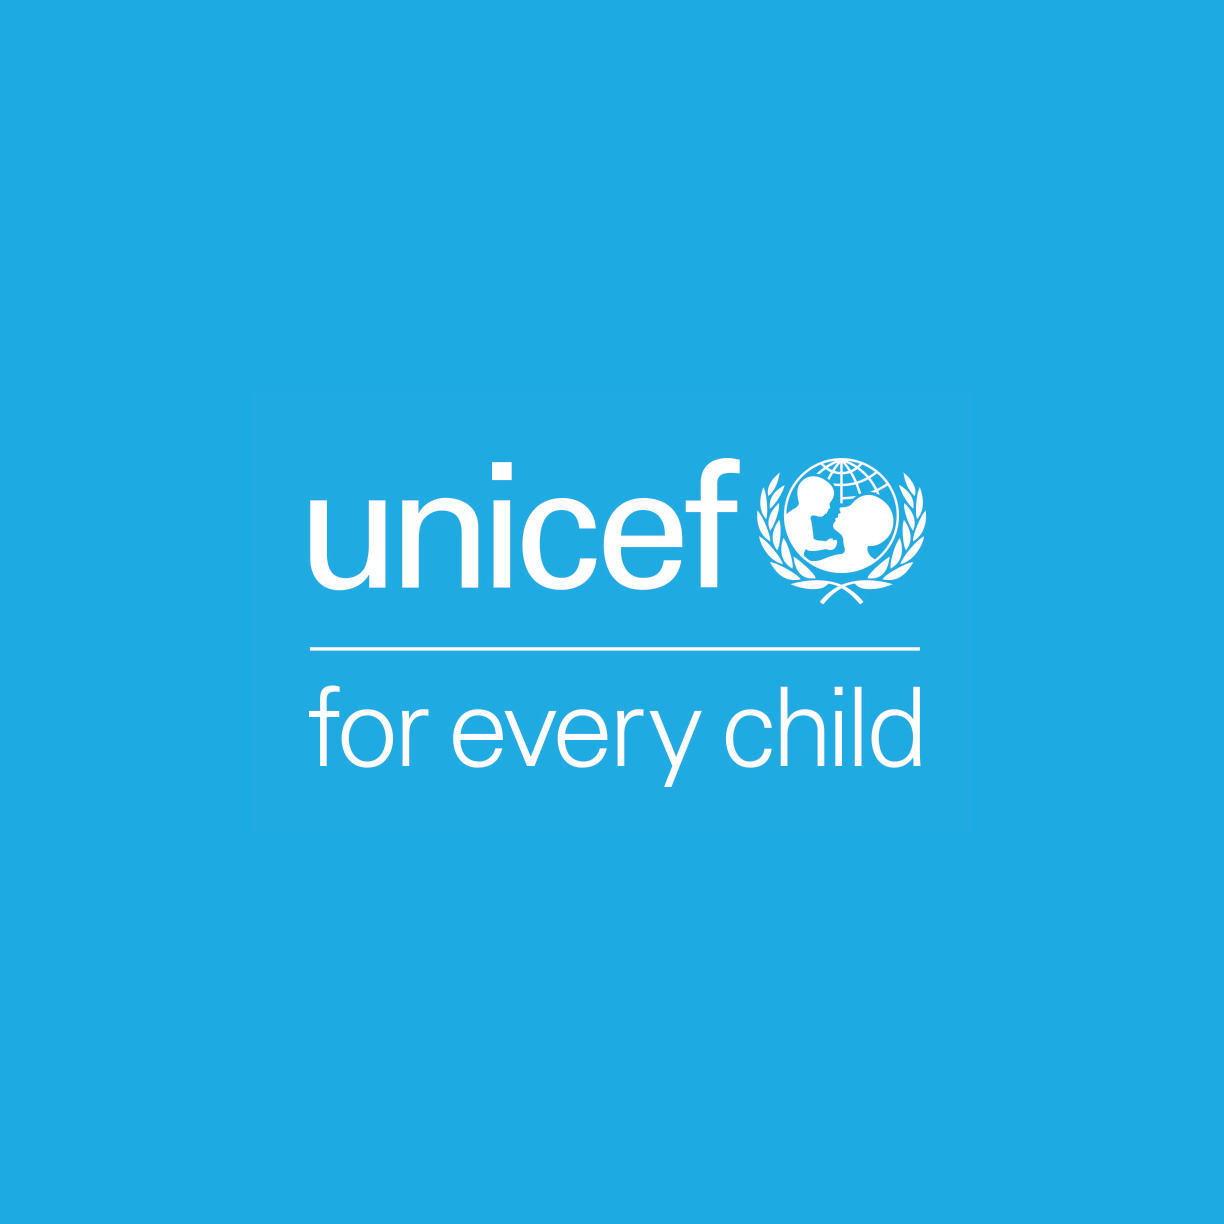 UNICEF expresses concern over death of children due to Nagorno-Karabakh conflict